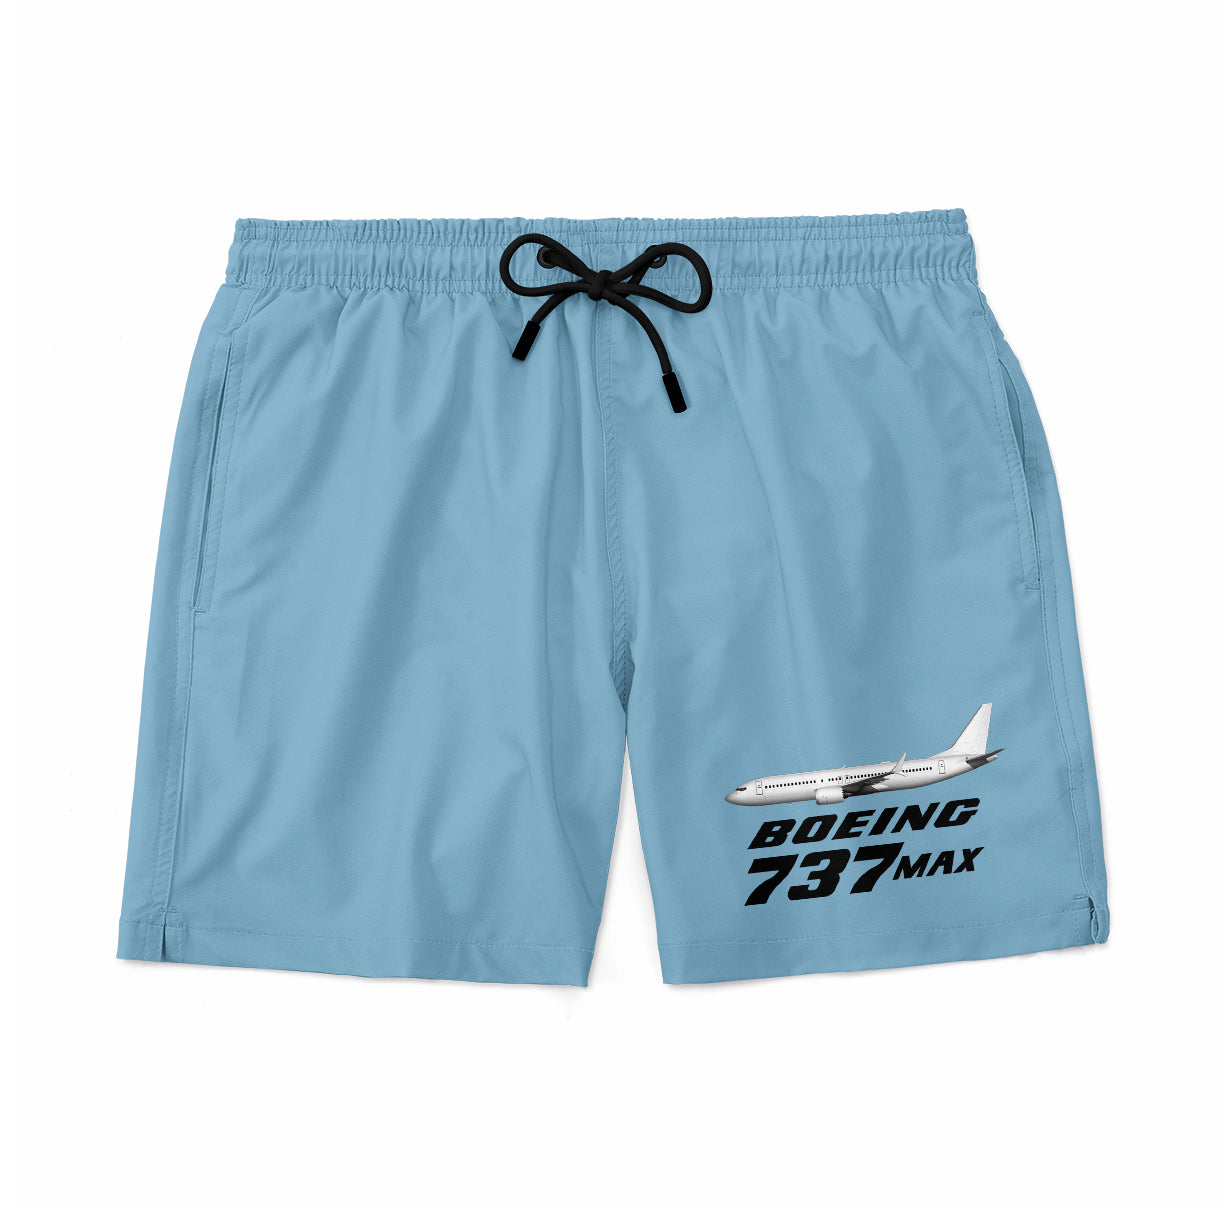 The Boeing 737Max Designed Swim Trunks & Shorts